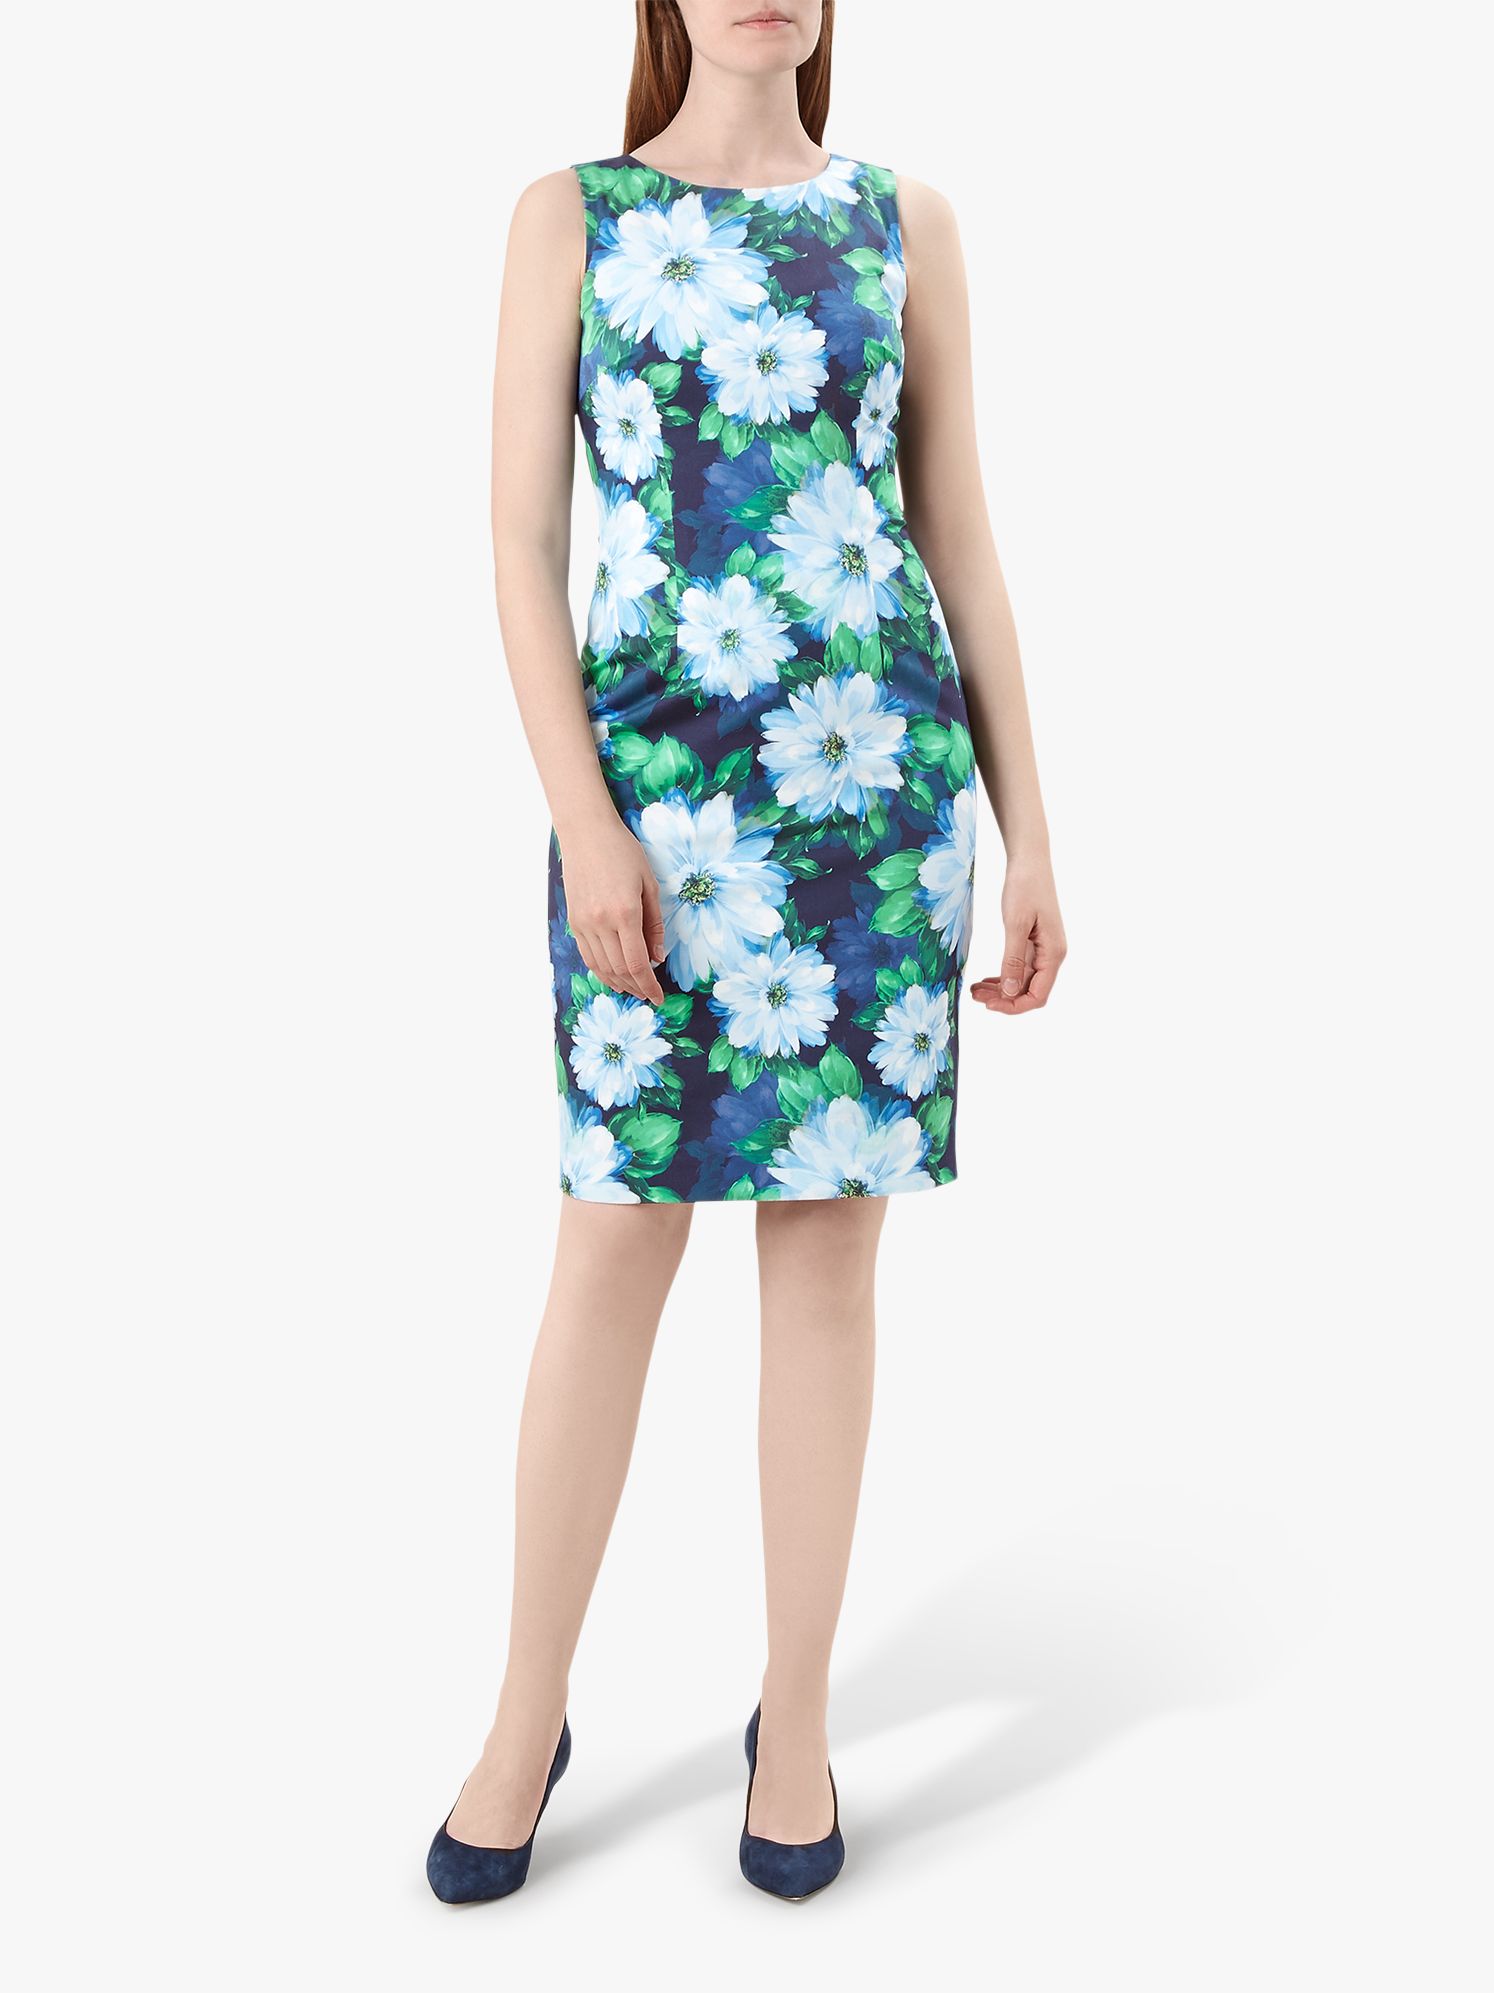 Hobbs Fiona Floral Print Dress, Navy/Multi